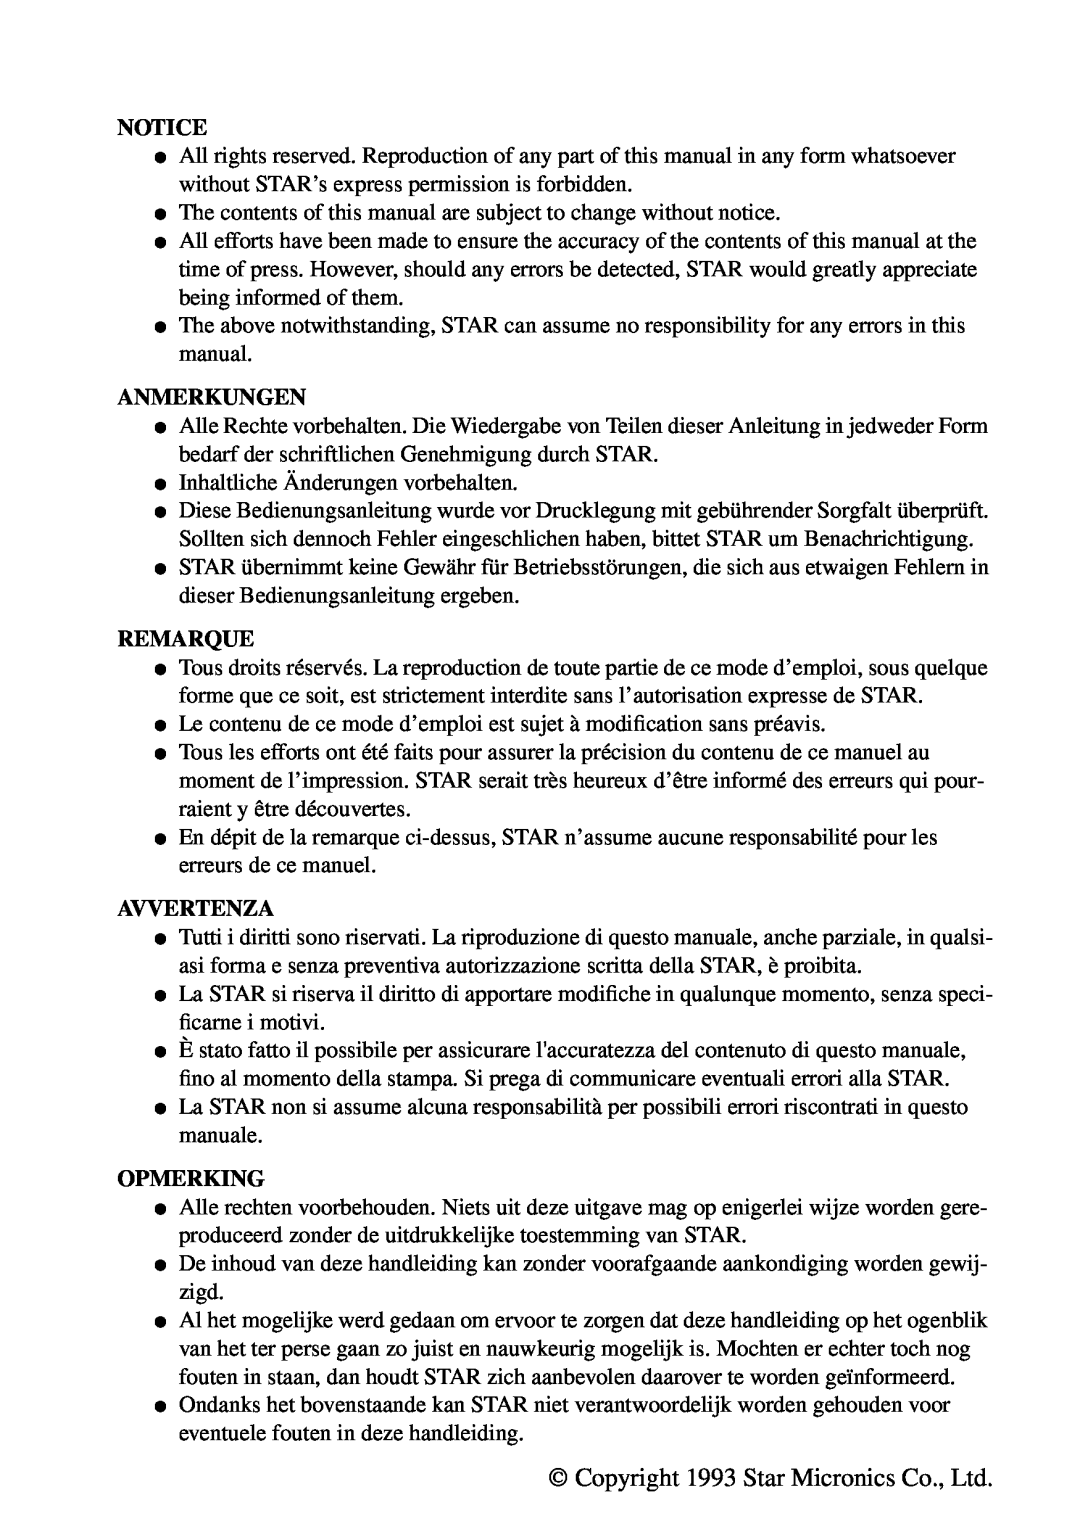 Star Micronics PT-10Q user manual Anmerkungen, Remarque, Avvertenza, Opmerking 